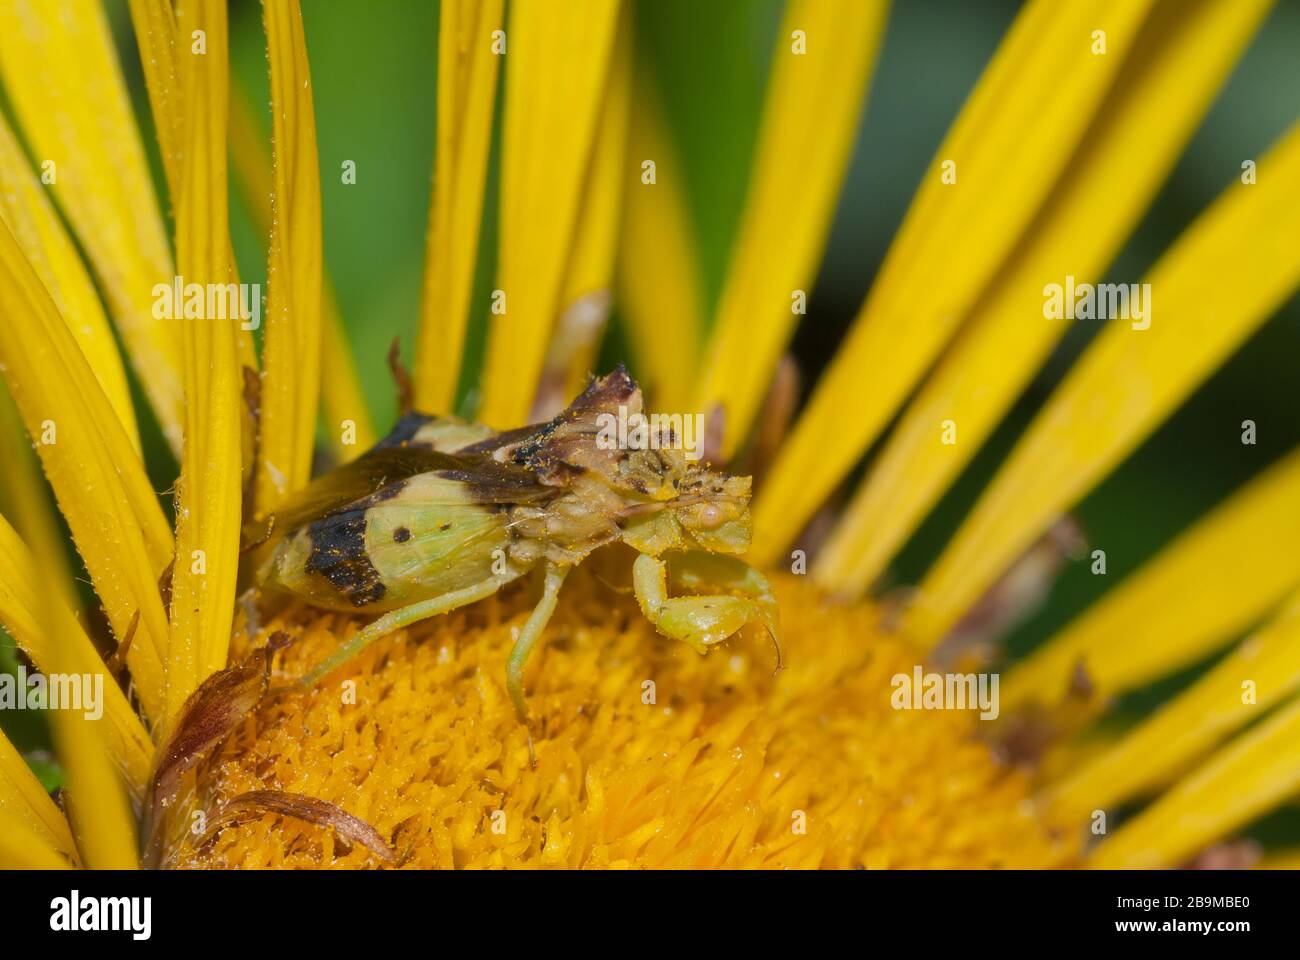 A jagged ambush bug, Phymata erosa, waiting for prey on an Elecampane flower, Inula helenium, in eastern Ontario, Canada. Stock Photo